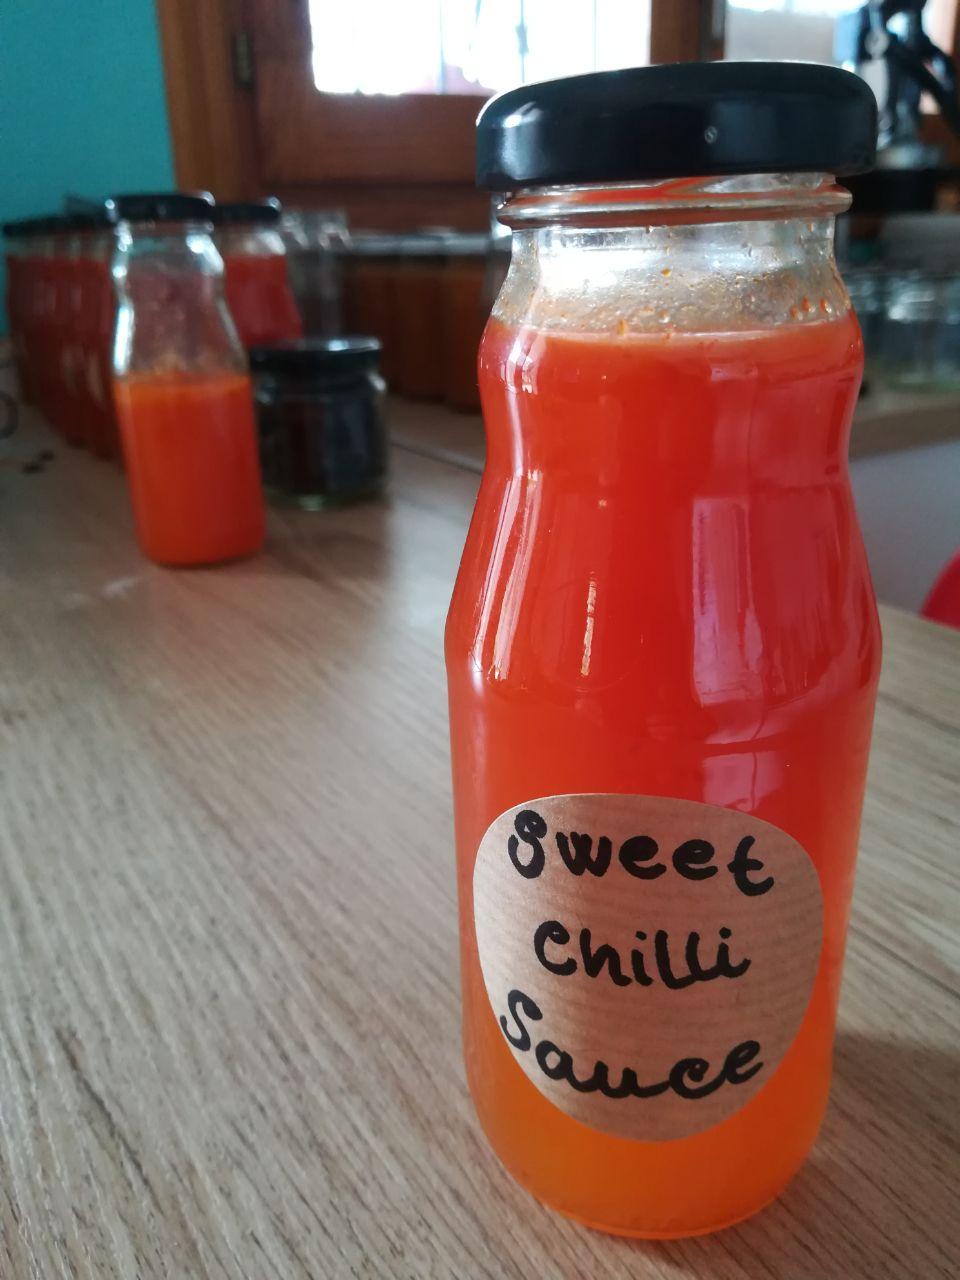 sweet chili sauce marina 2020-04-17_12-07-19